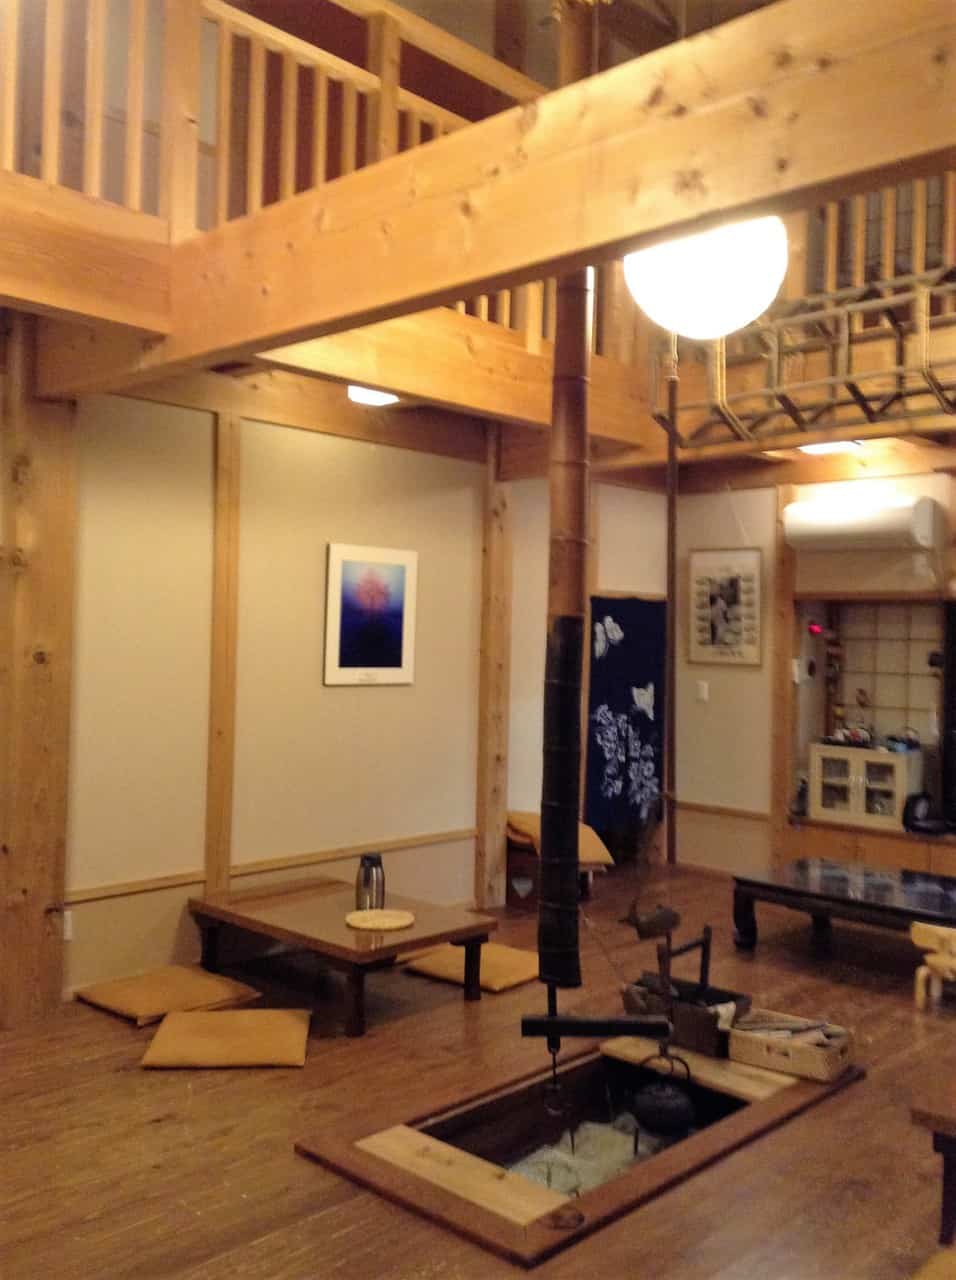 Yamakoshi : ma nuit en minshuku, chambre d’hôte japonaise.